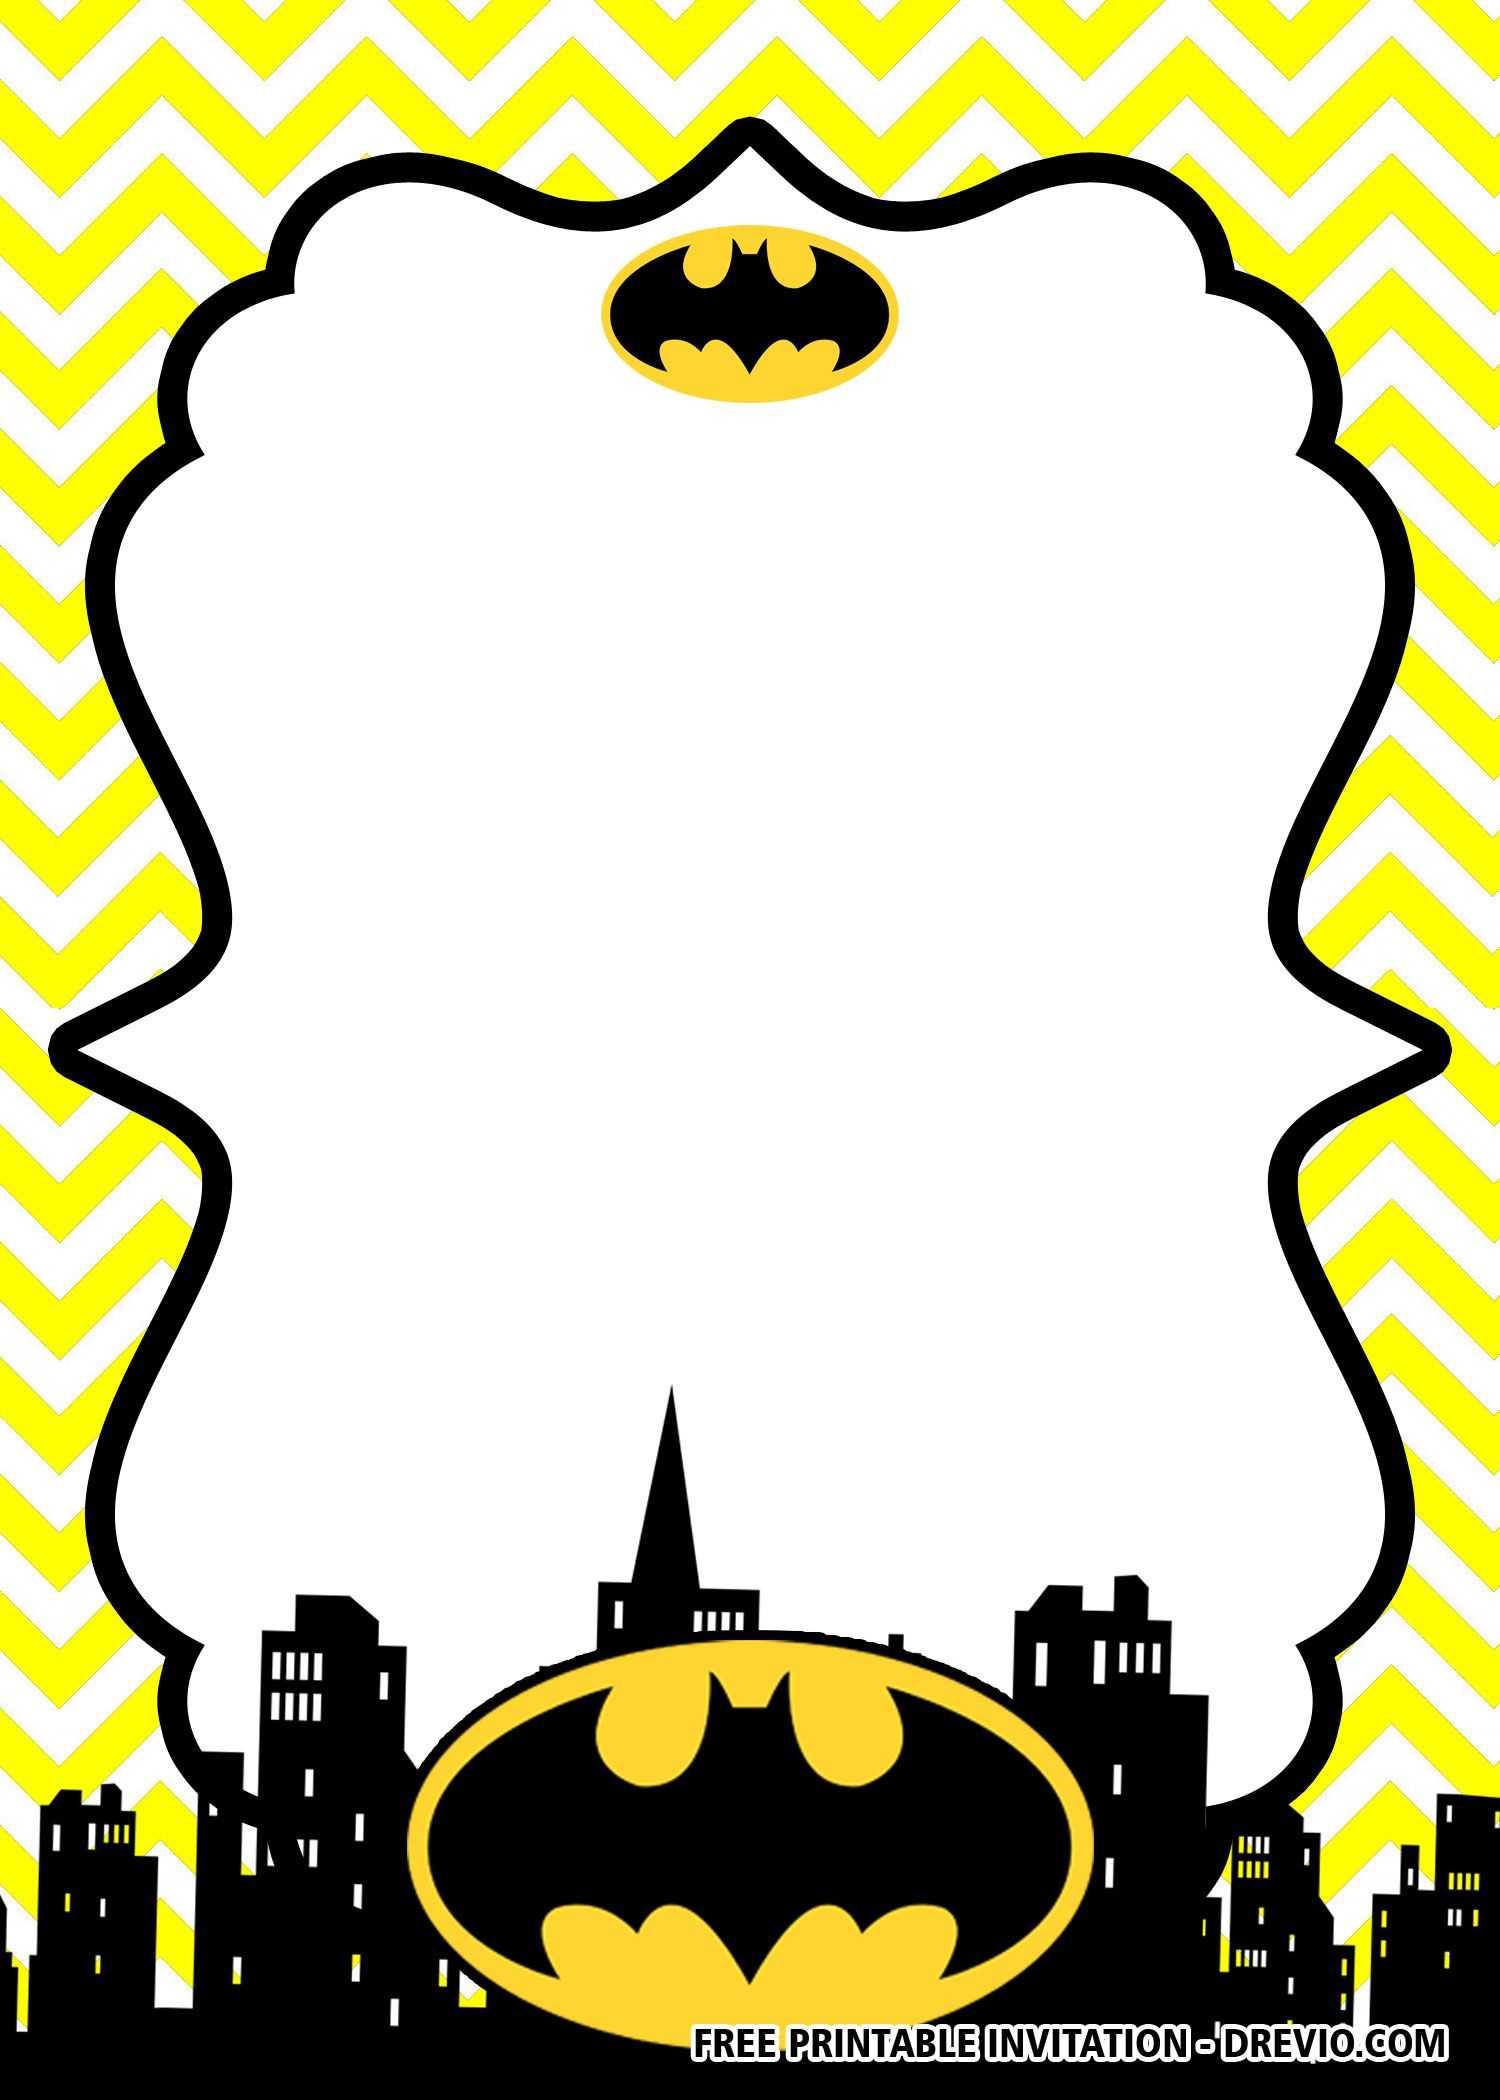 Free Printable Batman Birthday Invitation Templates | Batman With Batman Birthday Card Template